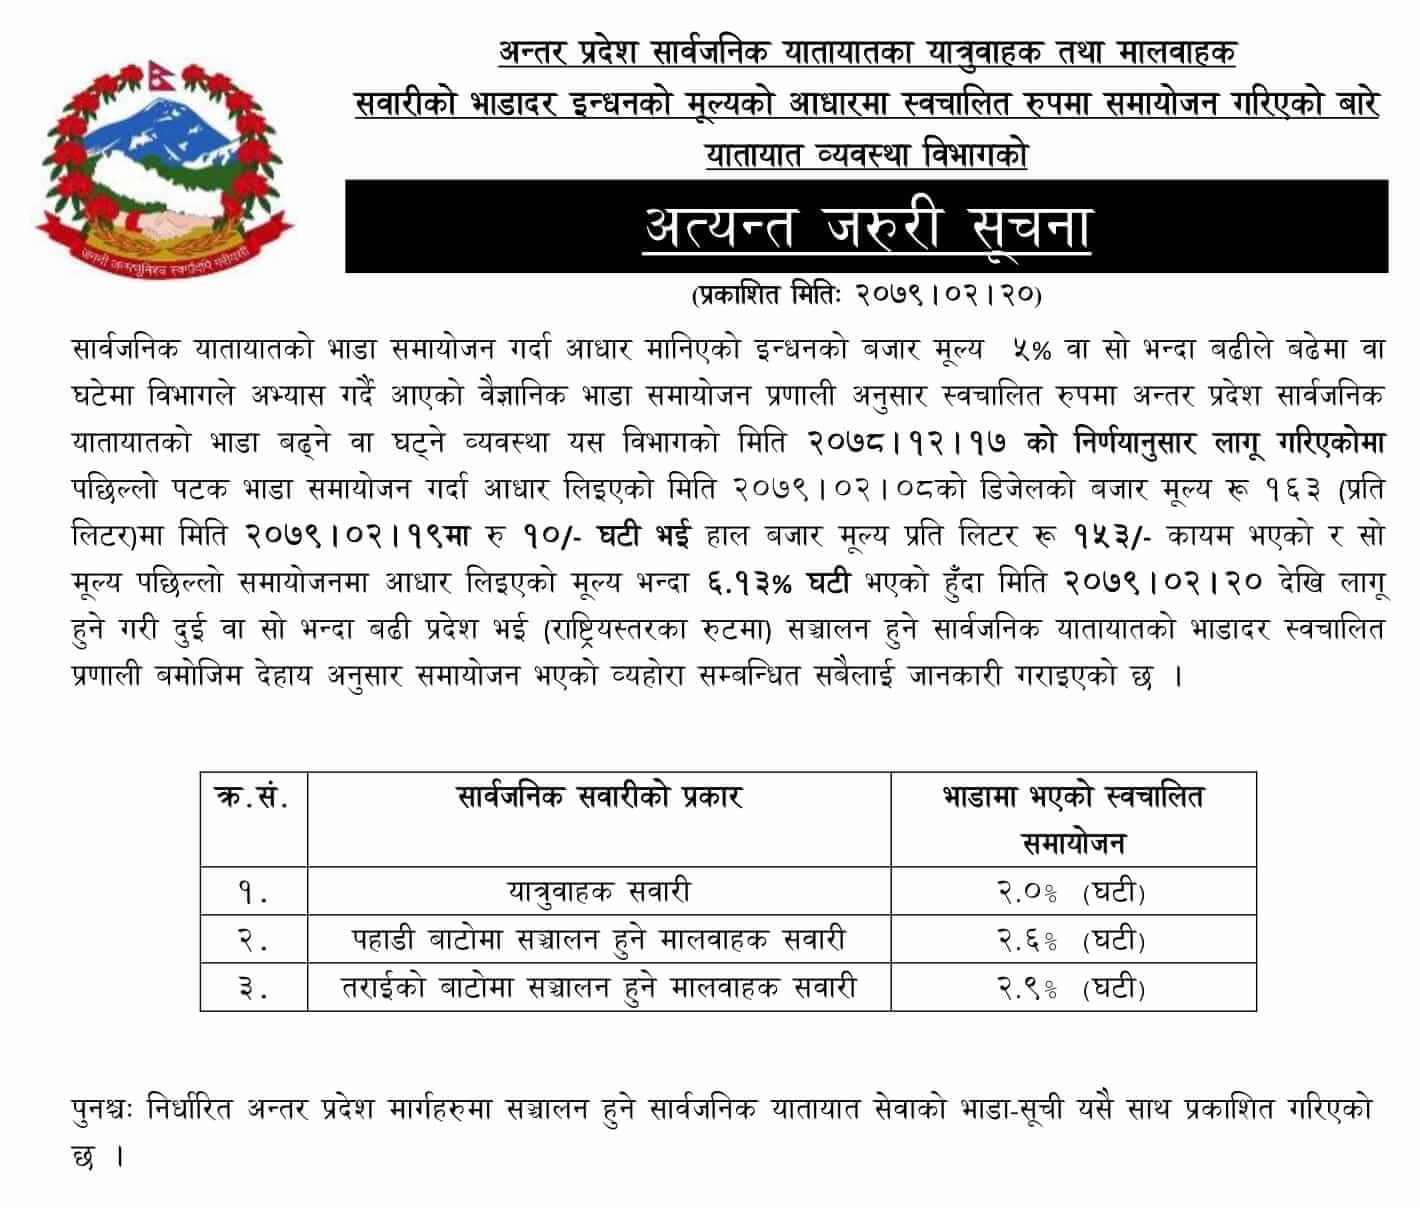 Latest Public Transportation New Fare in Nepal Effective from 2079 Jestha 20